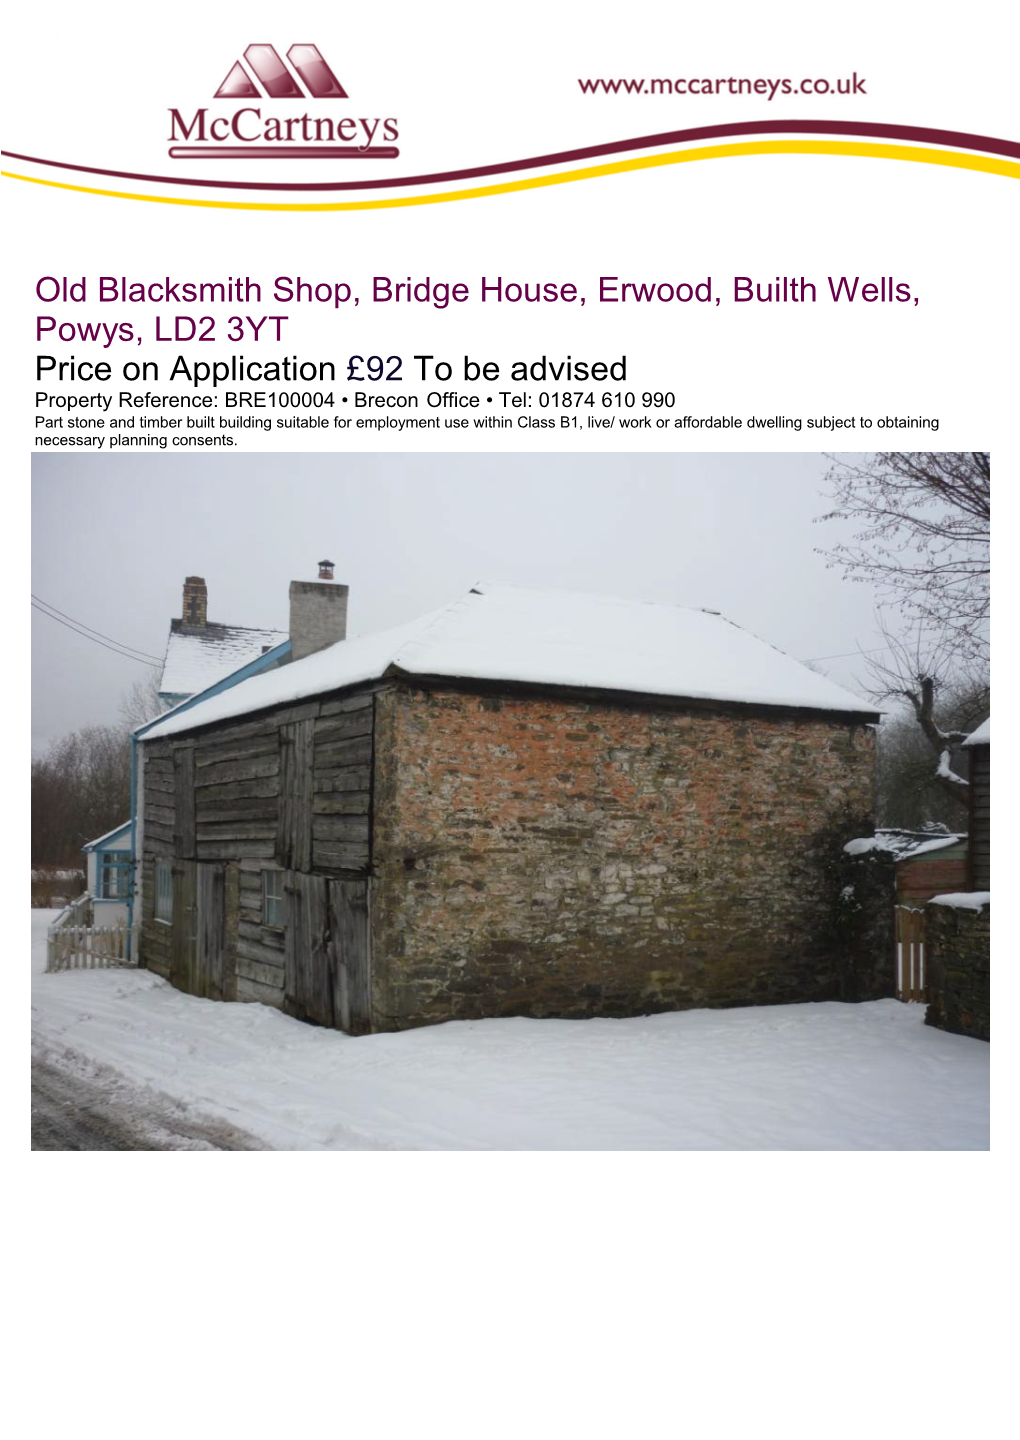 Old Blacksmith Shop, Bridge House, Erwood, Builth Wells, Powys, LD2 3YT Price on Application £92 to Be Advised